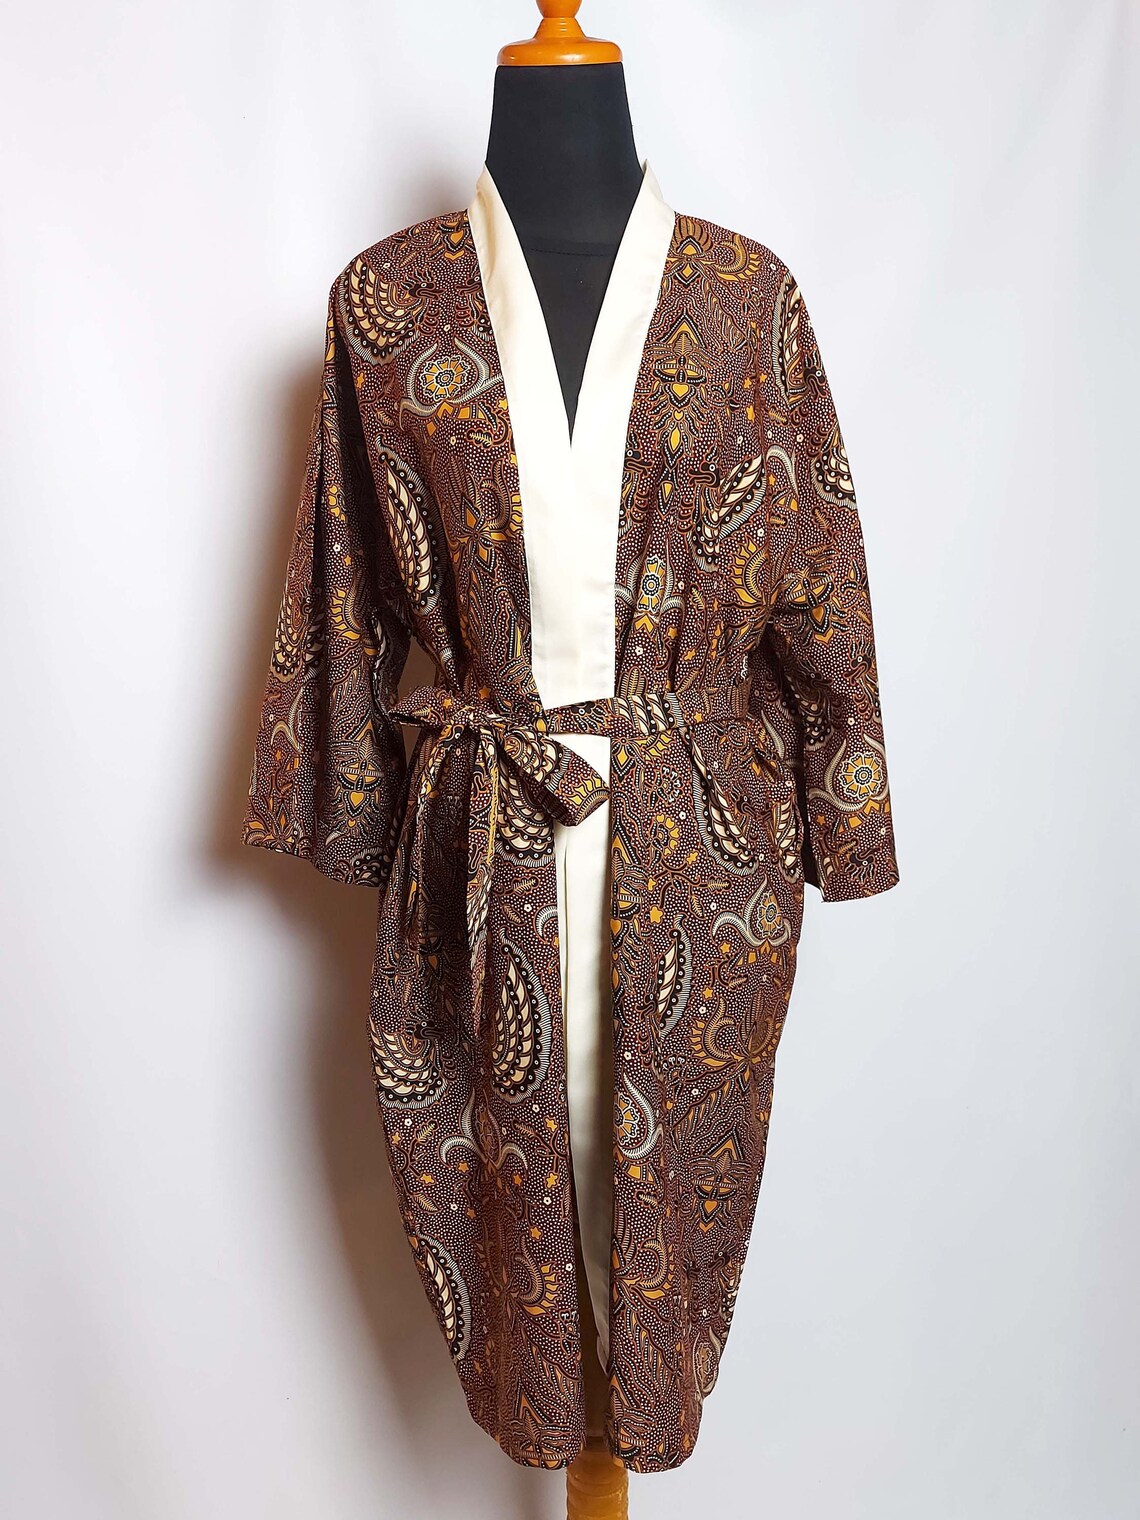 Cotton Batik Kimono Robe Women in Marron and Beige Ethnic - Etsy